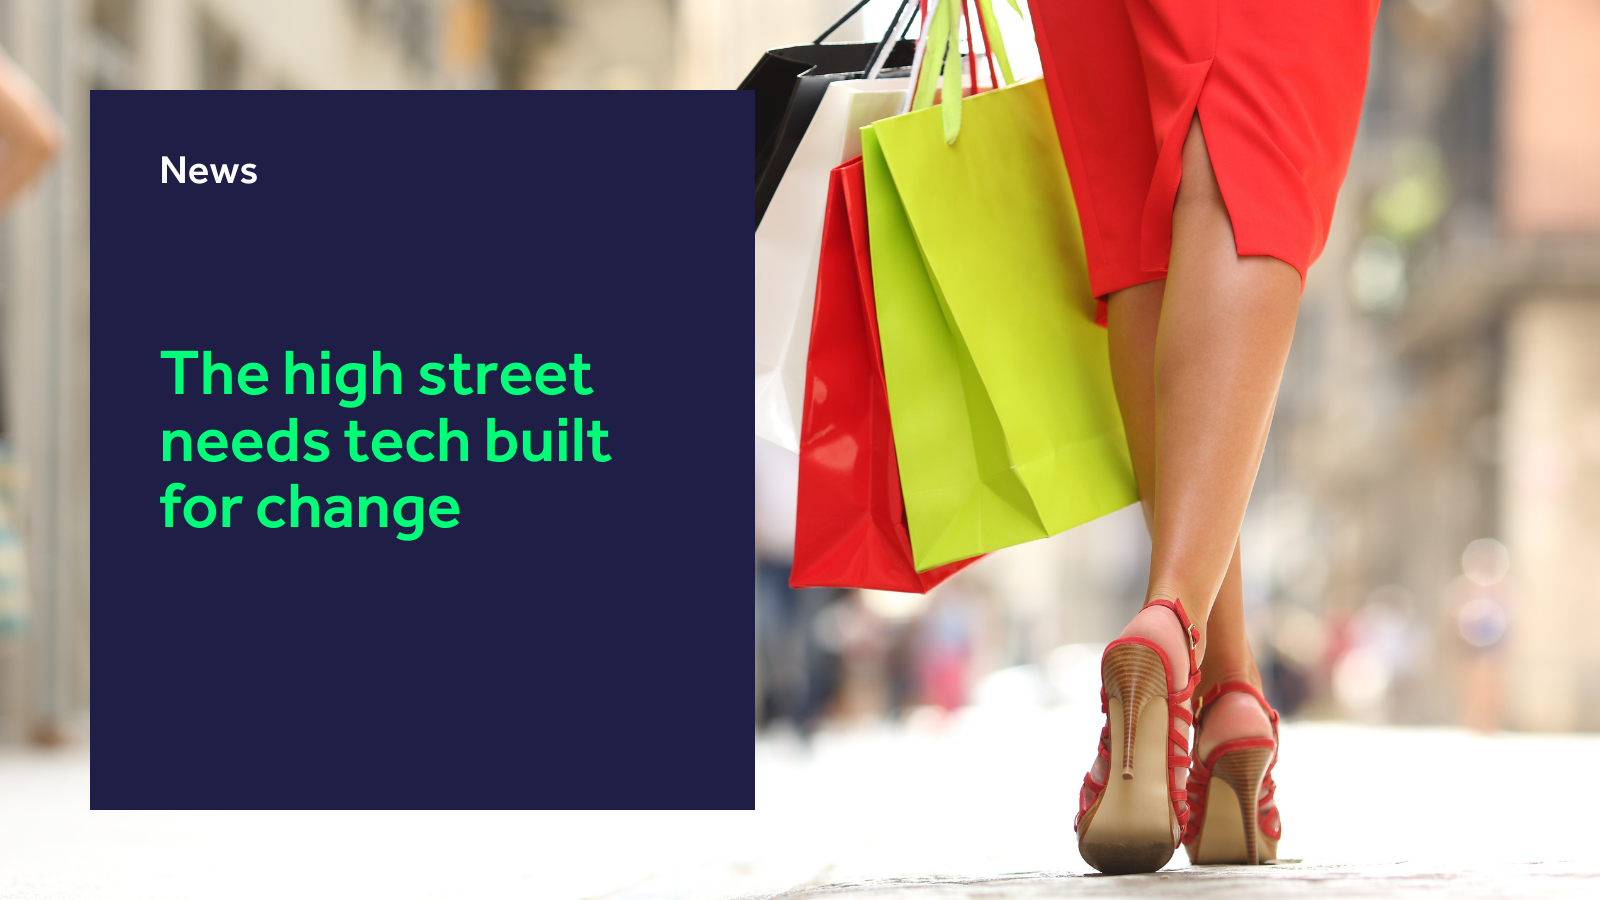 The high street needs tech built for change